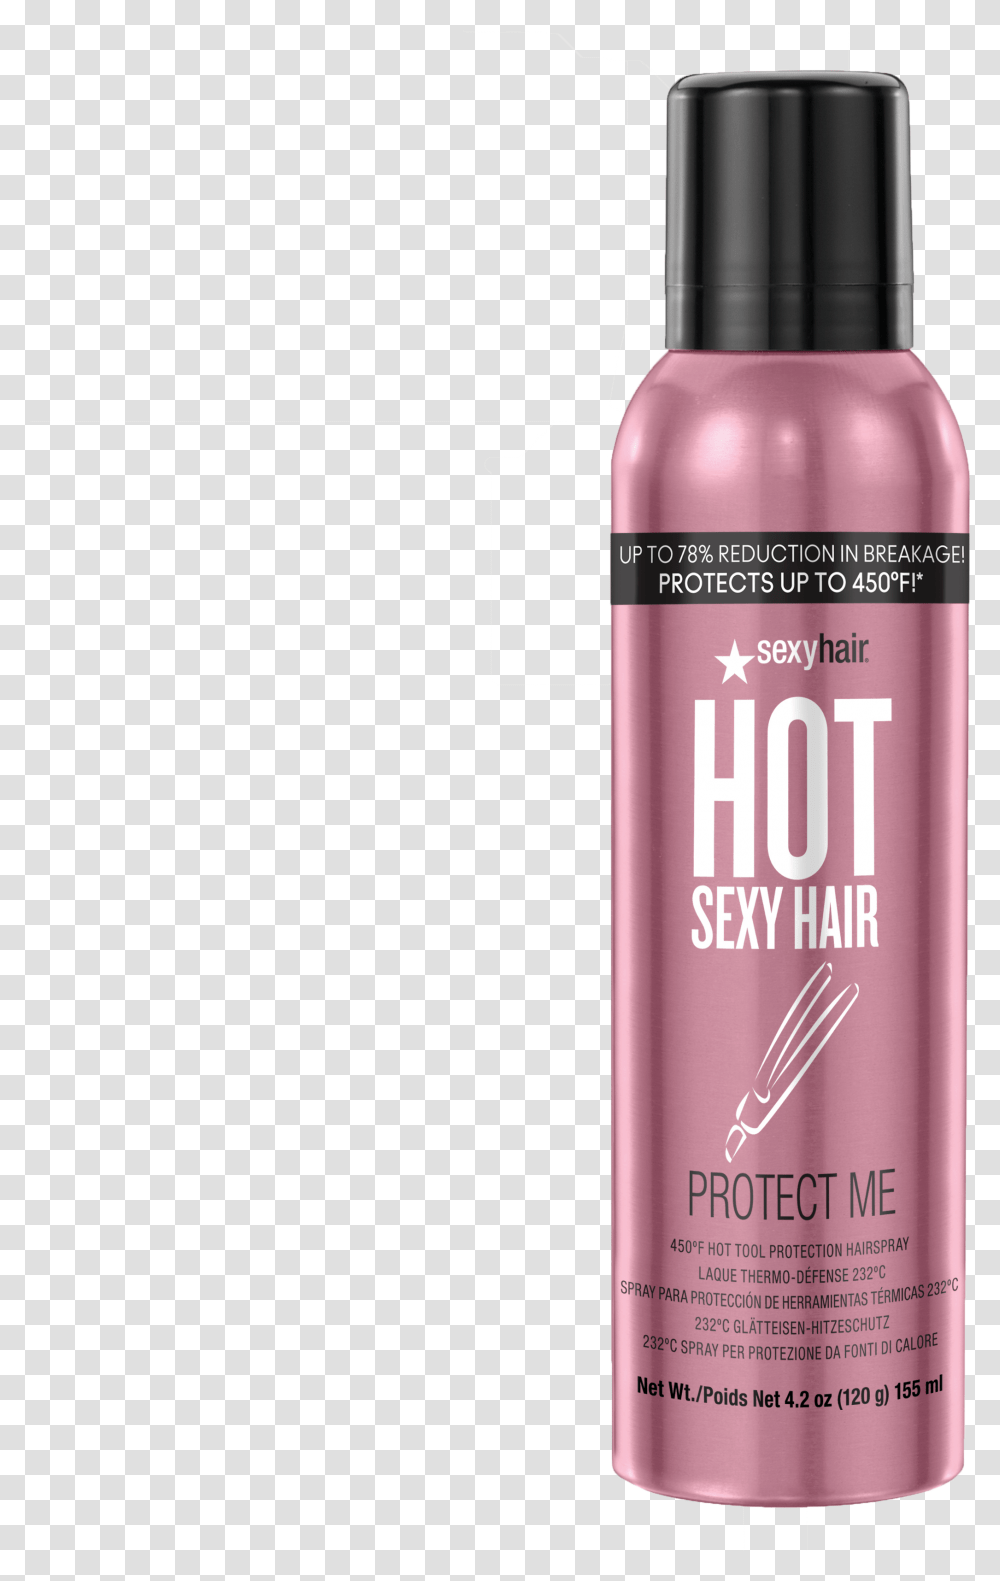 Sexy Hair Hot Sexy Hair Protect Me Hot Sexy Hair Protect Me, Aluminium, Tin, Can, Spray Can Transparent Png